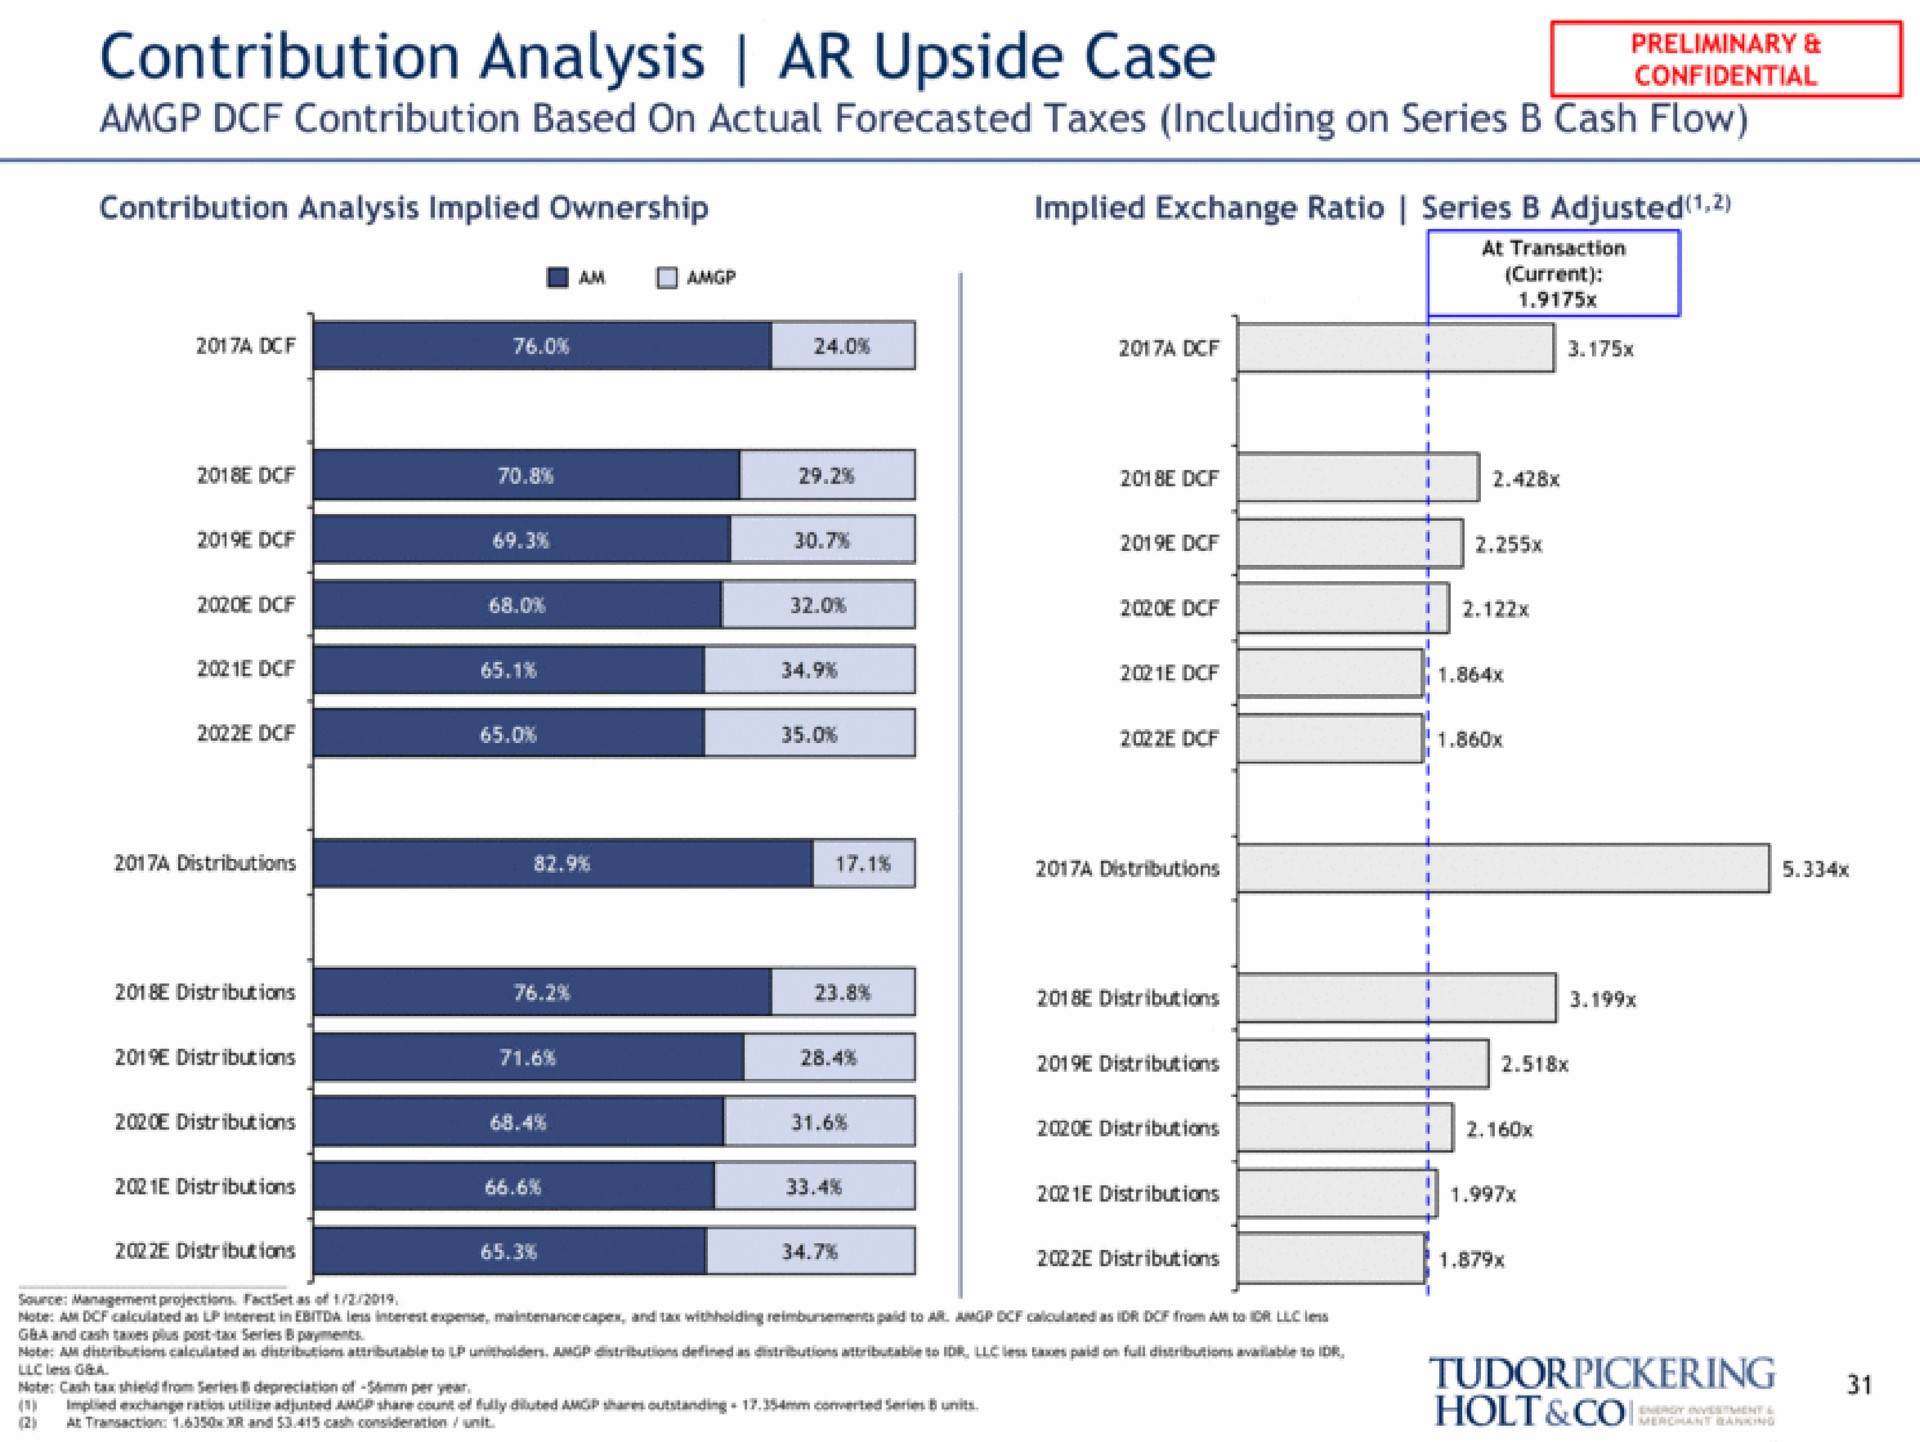 contribution analysis upside case | Tudor, Pickering, Holt & Co